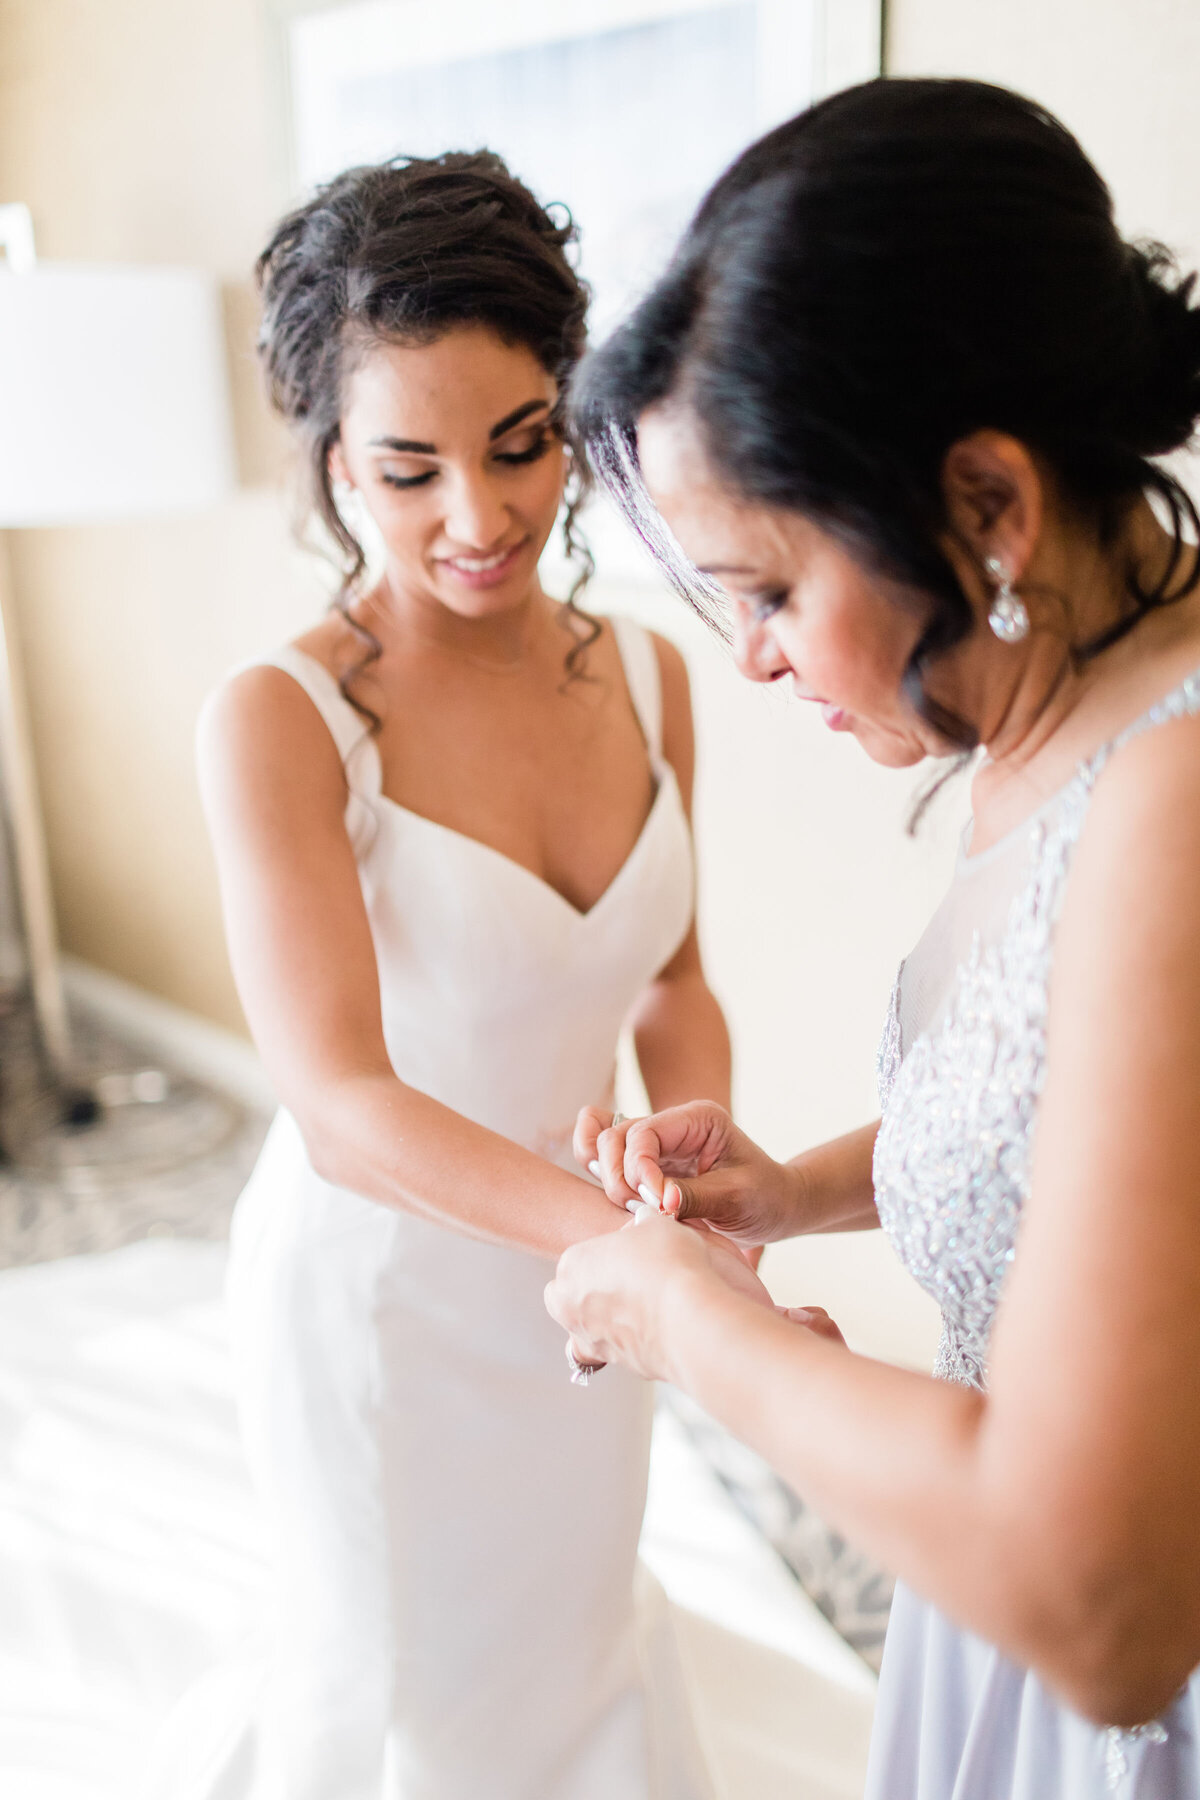 Mom helping bride put on bracelet